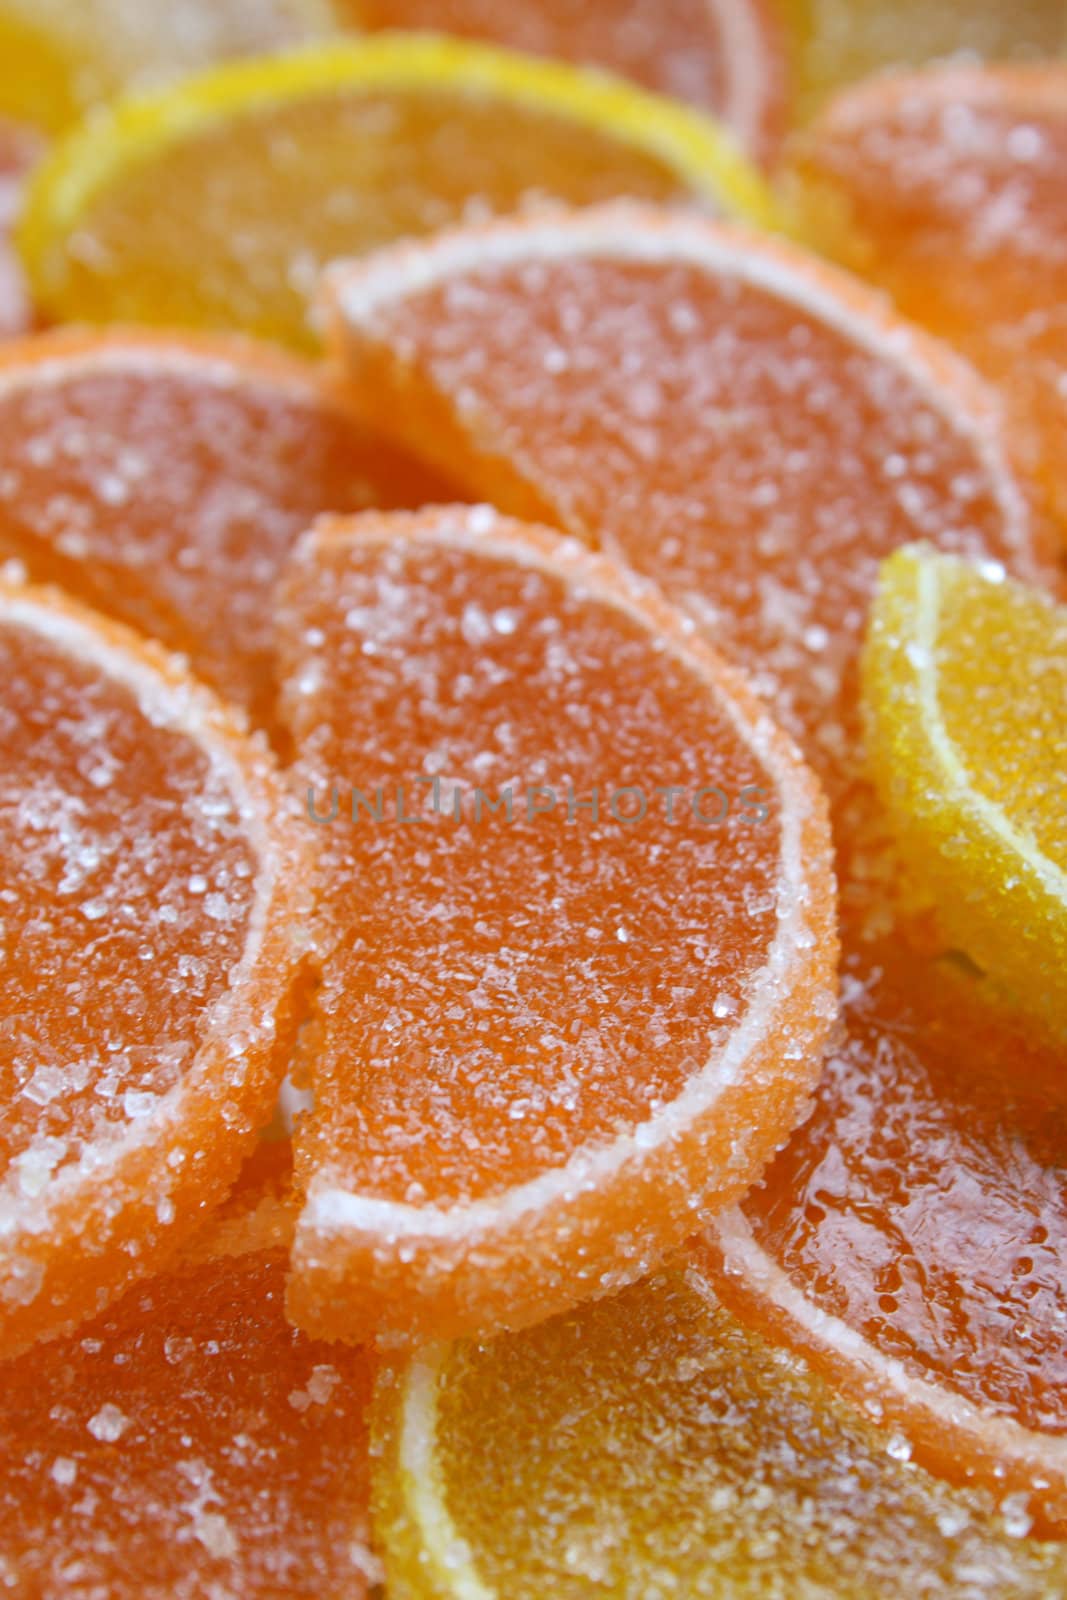 Sweet citrus slices by Lessadar